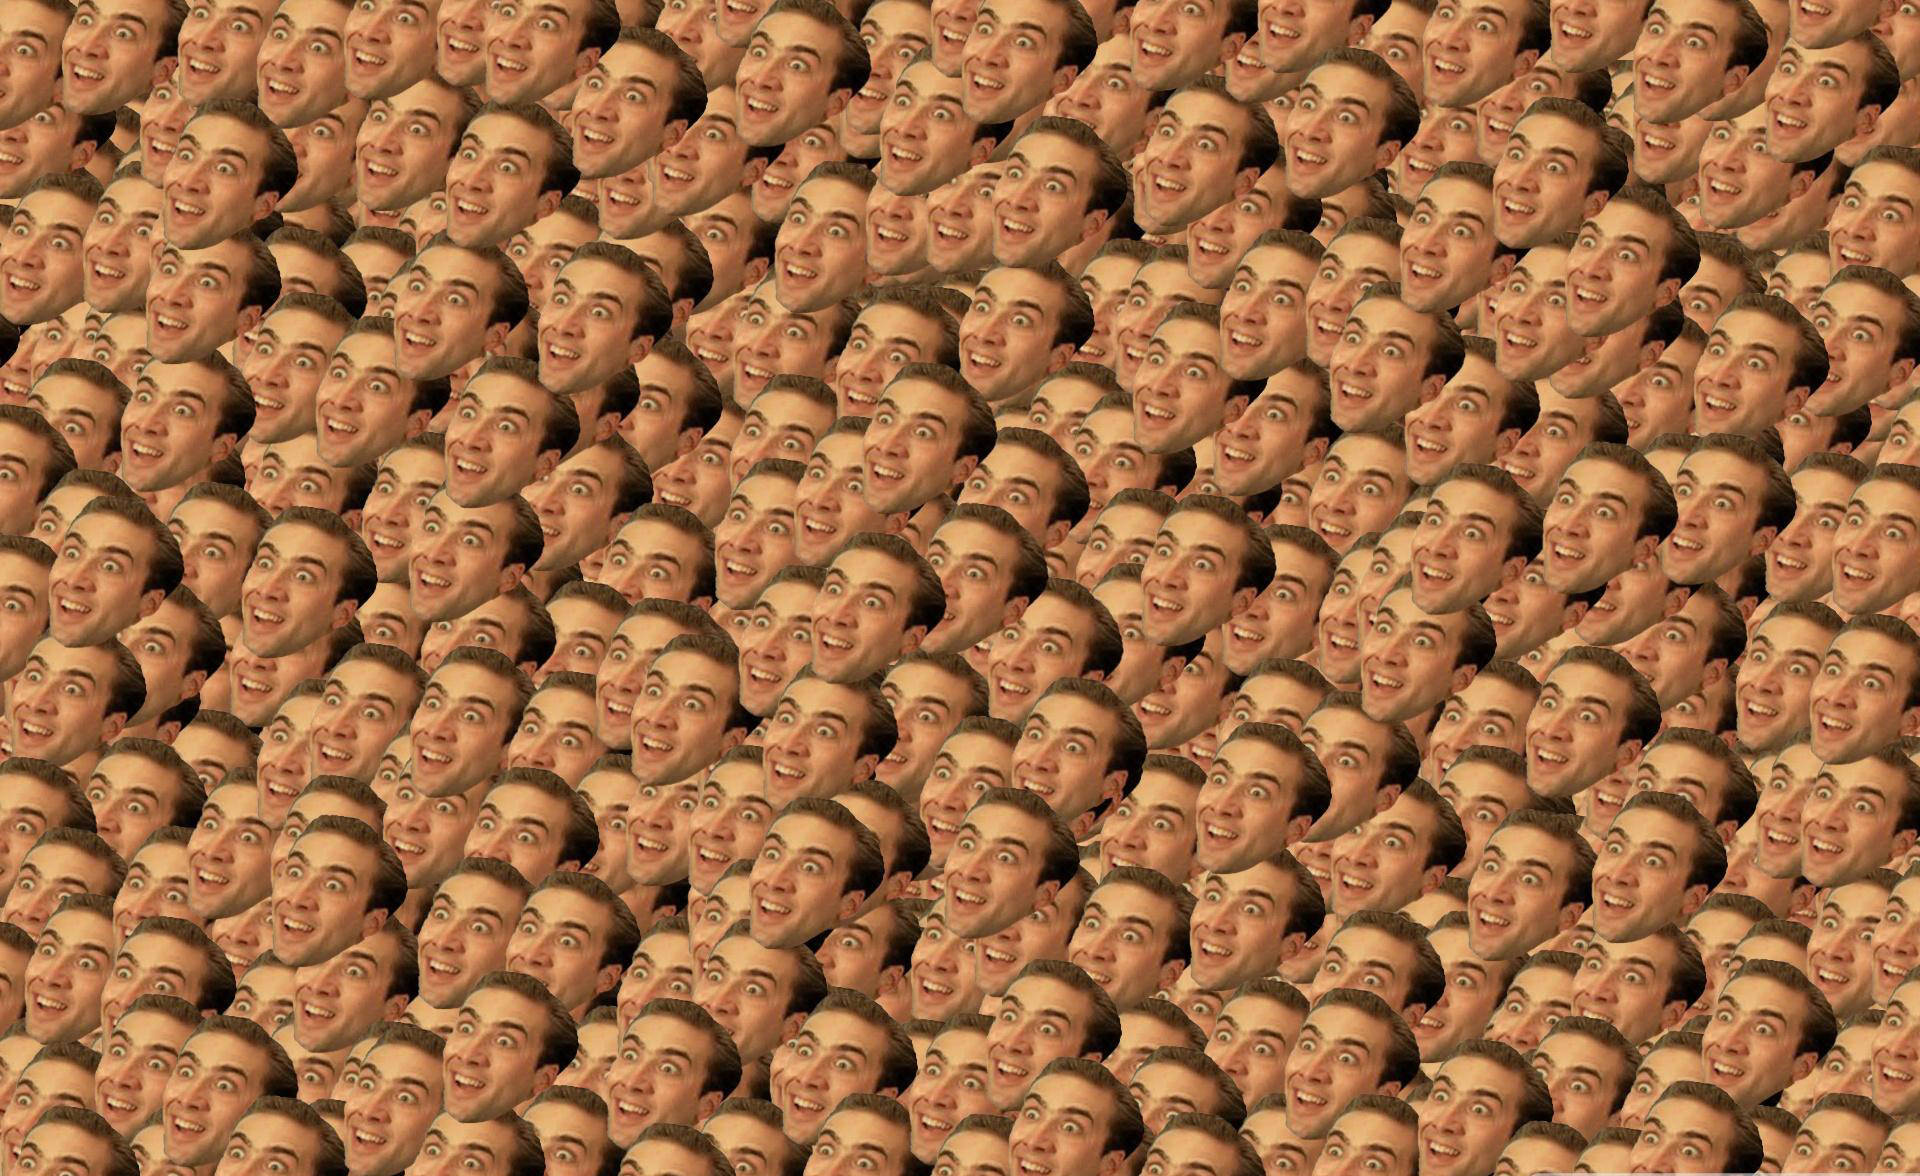 Nicolas Cage Meme Head Pattern